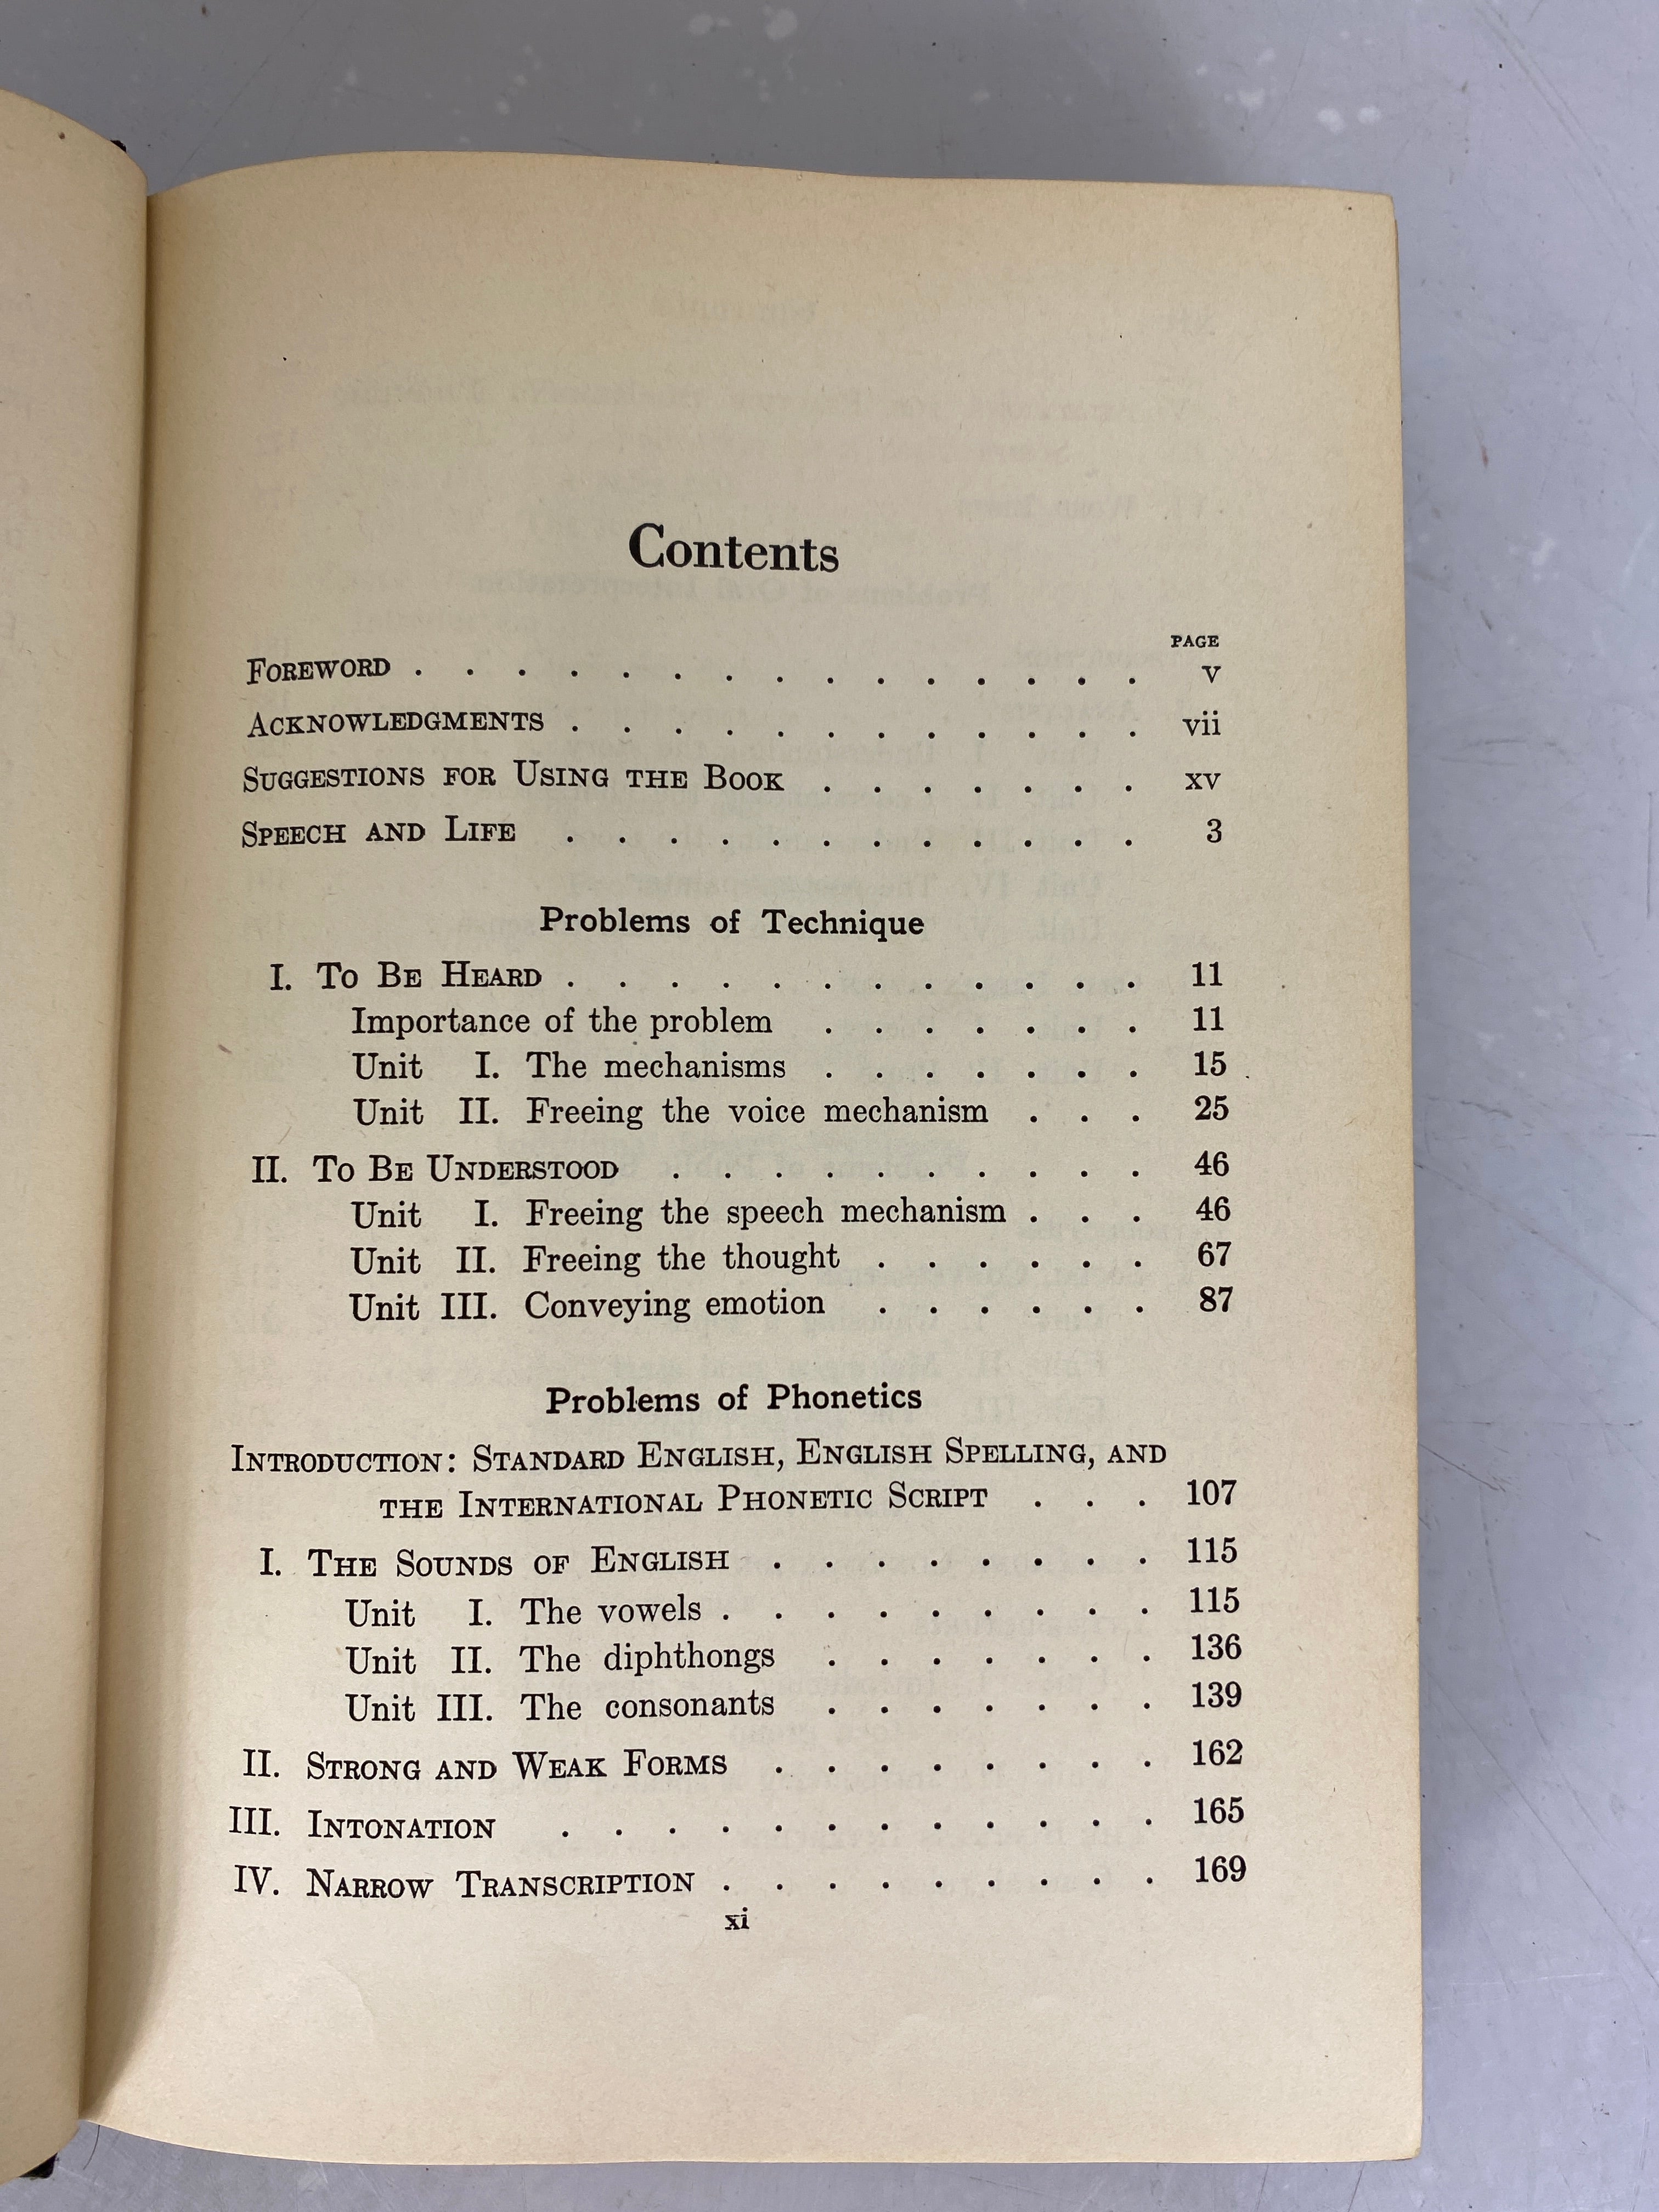 Voice and Speech Problems by Raubicheck, Davis, and Carll 1937 HC